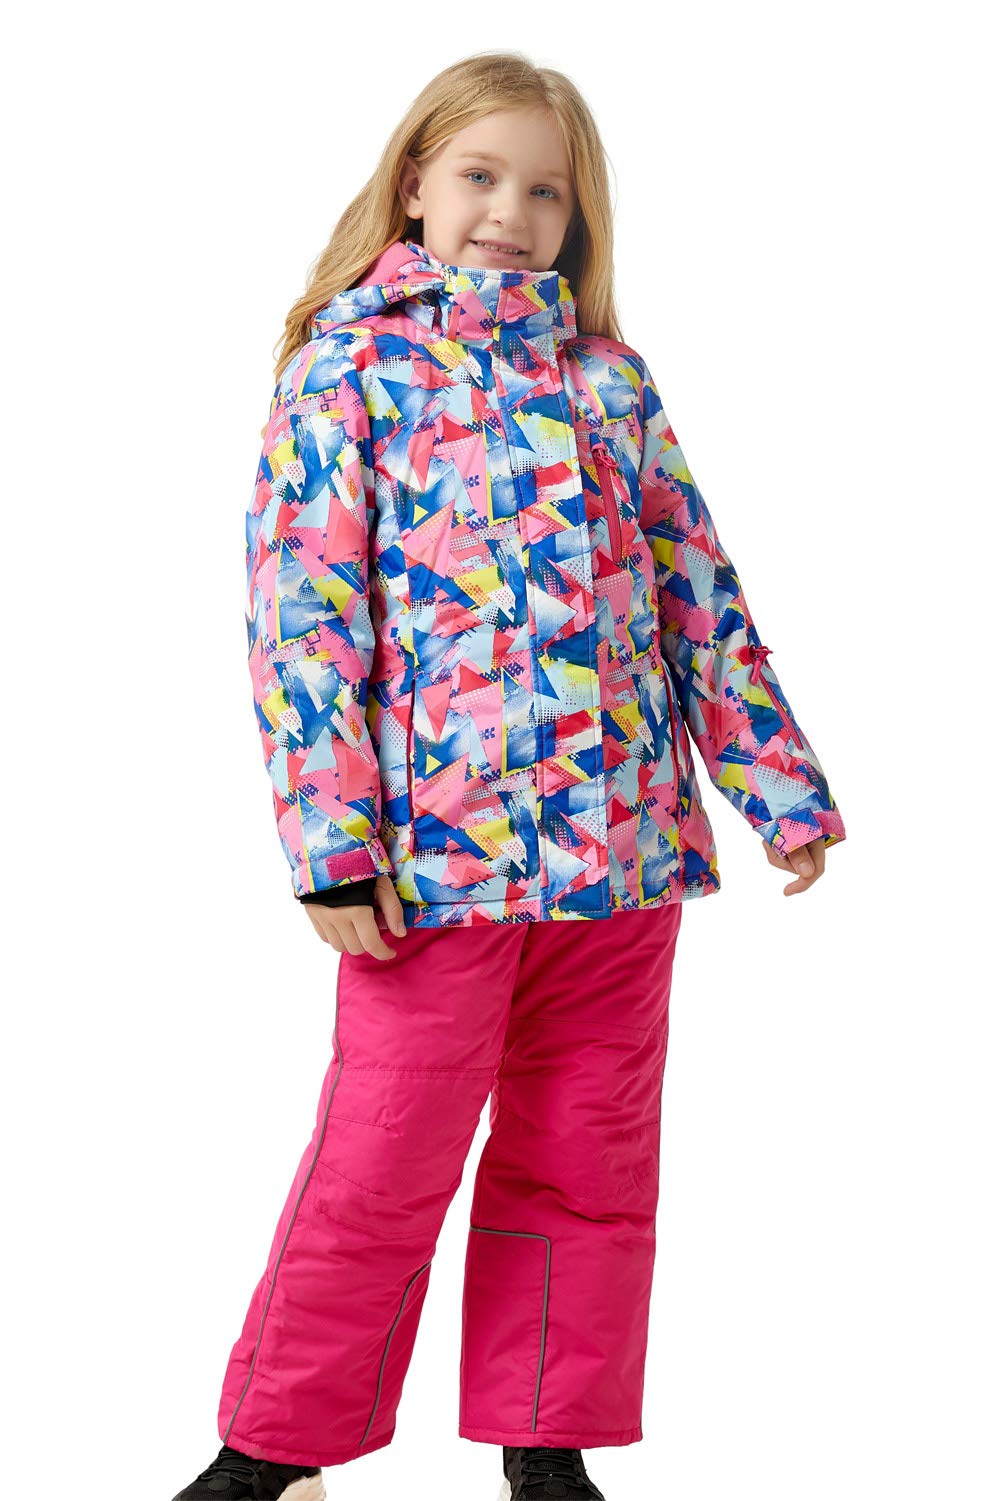 M2C Girls Thicken Warm Hooded Color Block Ski Snowsuit Jacket & Pants Pink 6/7